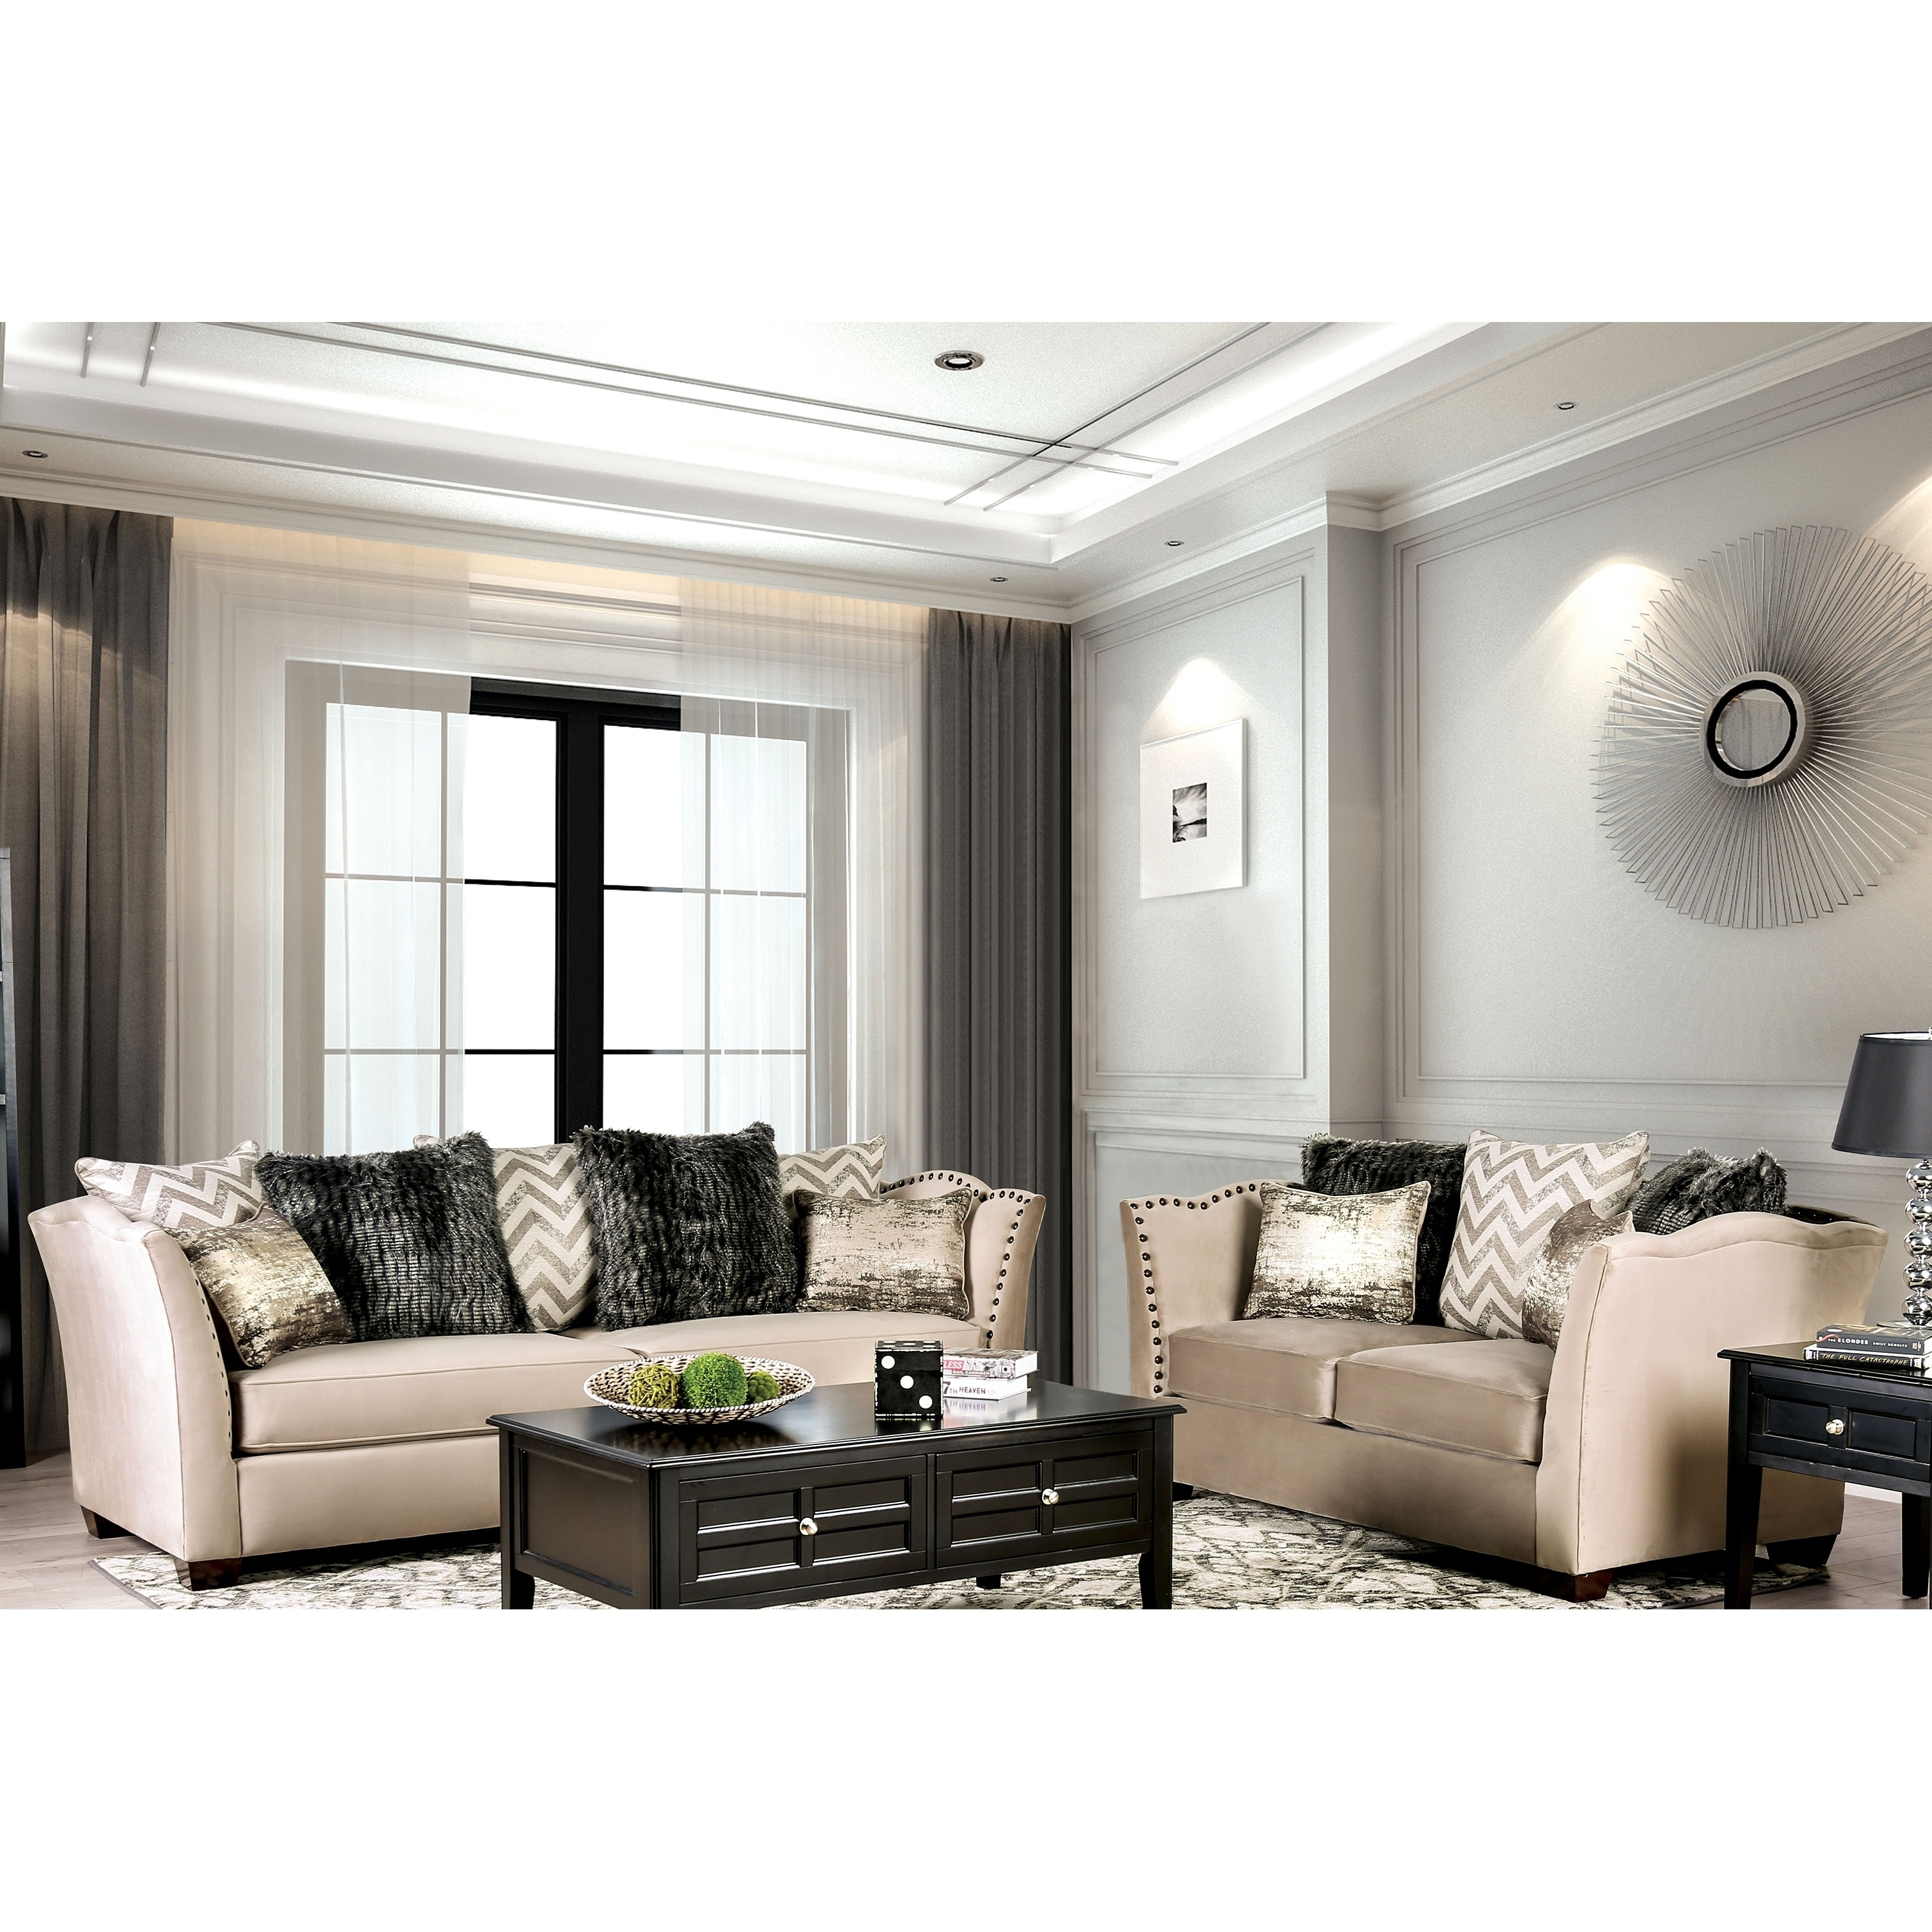 Furniture Of America Lawanda Contemporary Beige 2 Piece Living Room Set On Sale Overstock 28408445